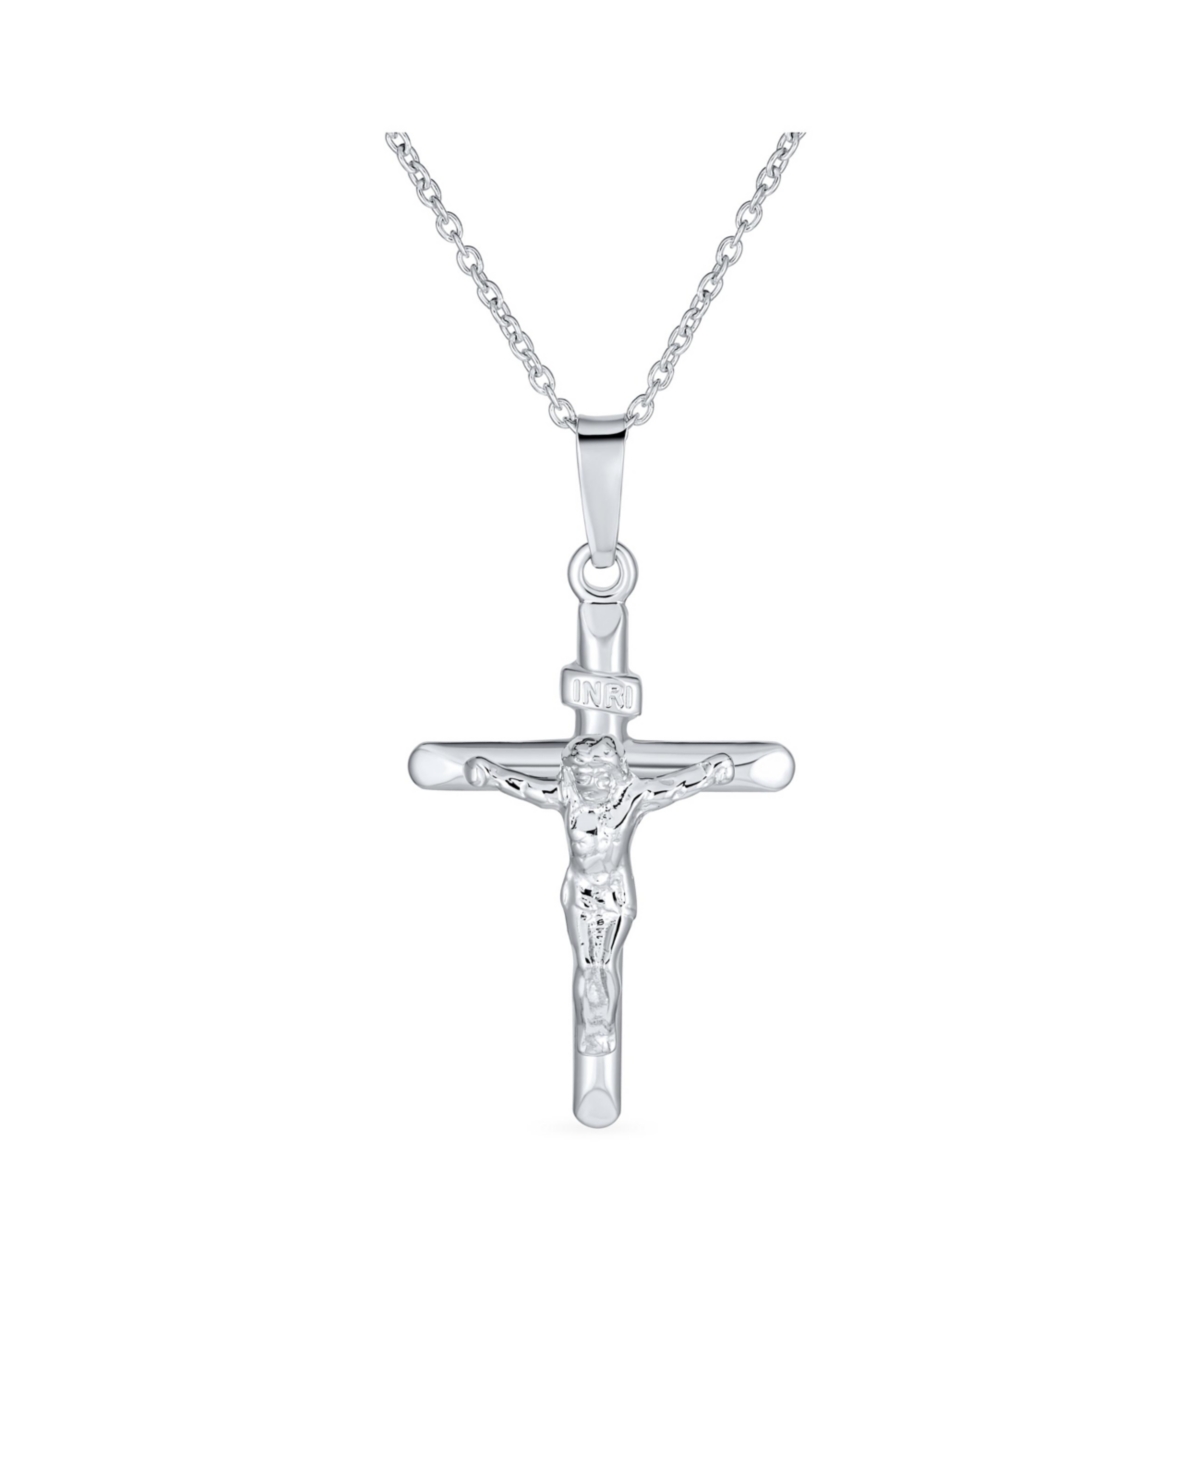 Unisex Simple Christian Catholic Religious Jewelry Medium Traditional Inri Jesus Crucifix Cross Necklace Pendant For Women Men Teen .925